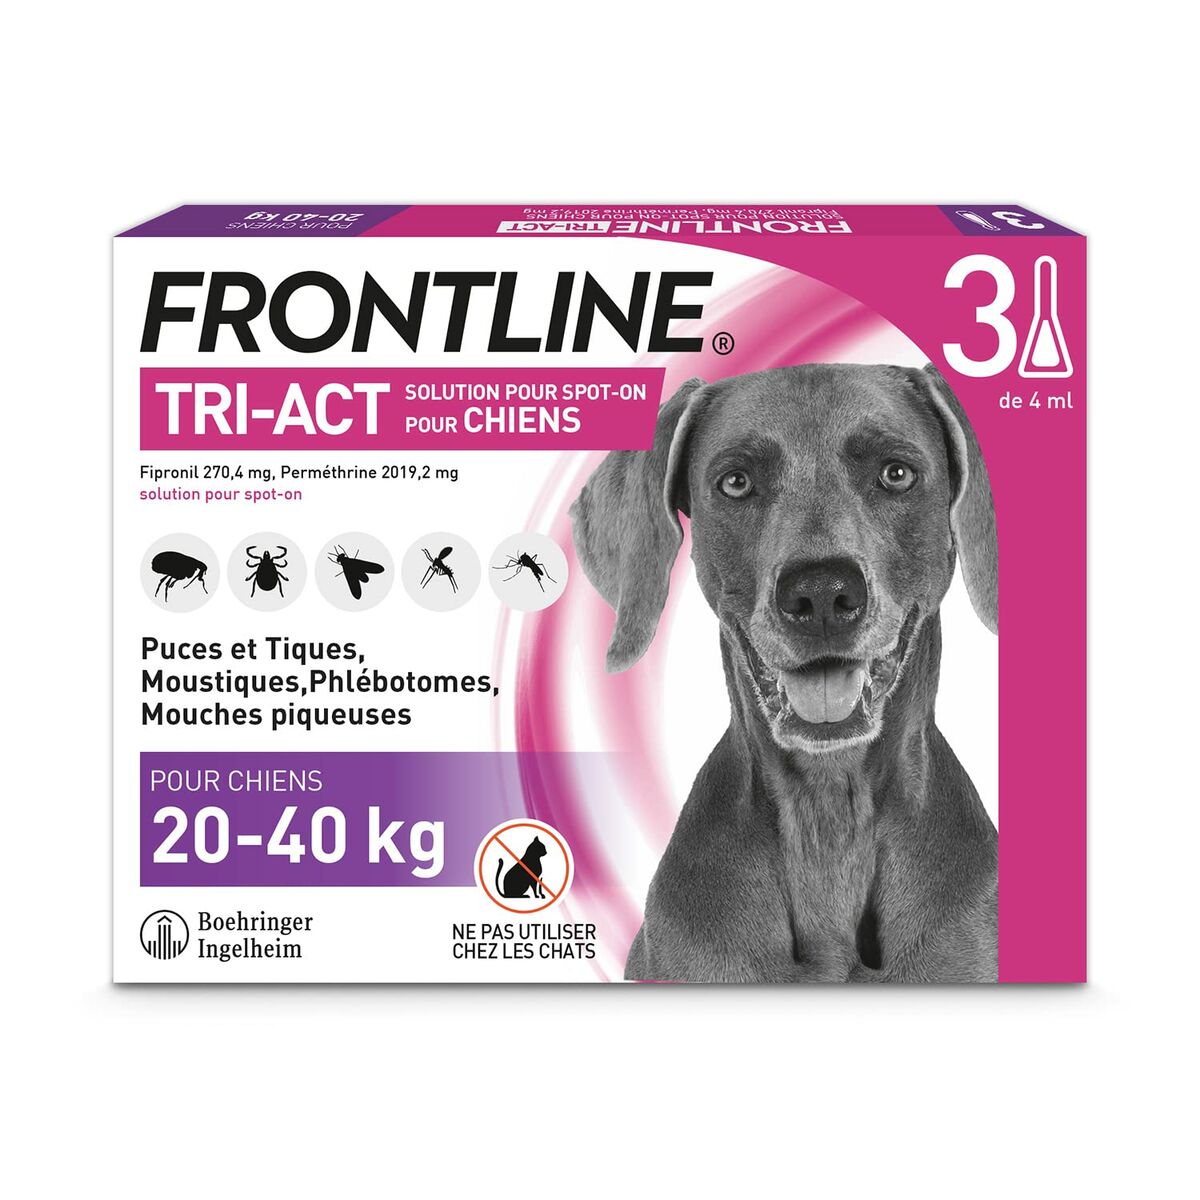 Pipetti koirille Frontline Tri-Act 20-40 Kg